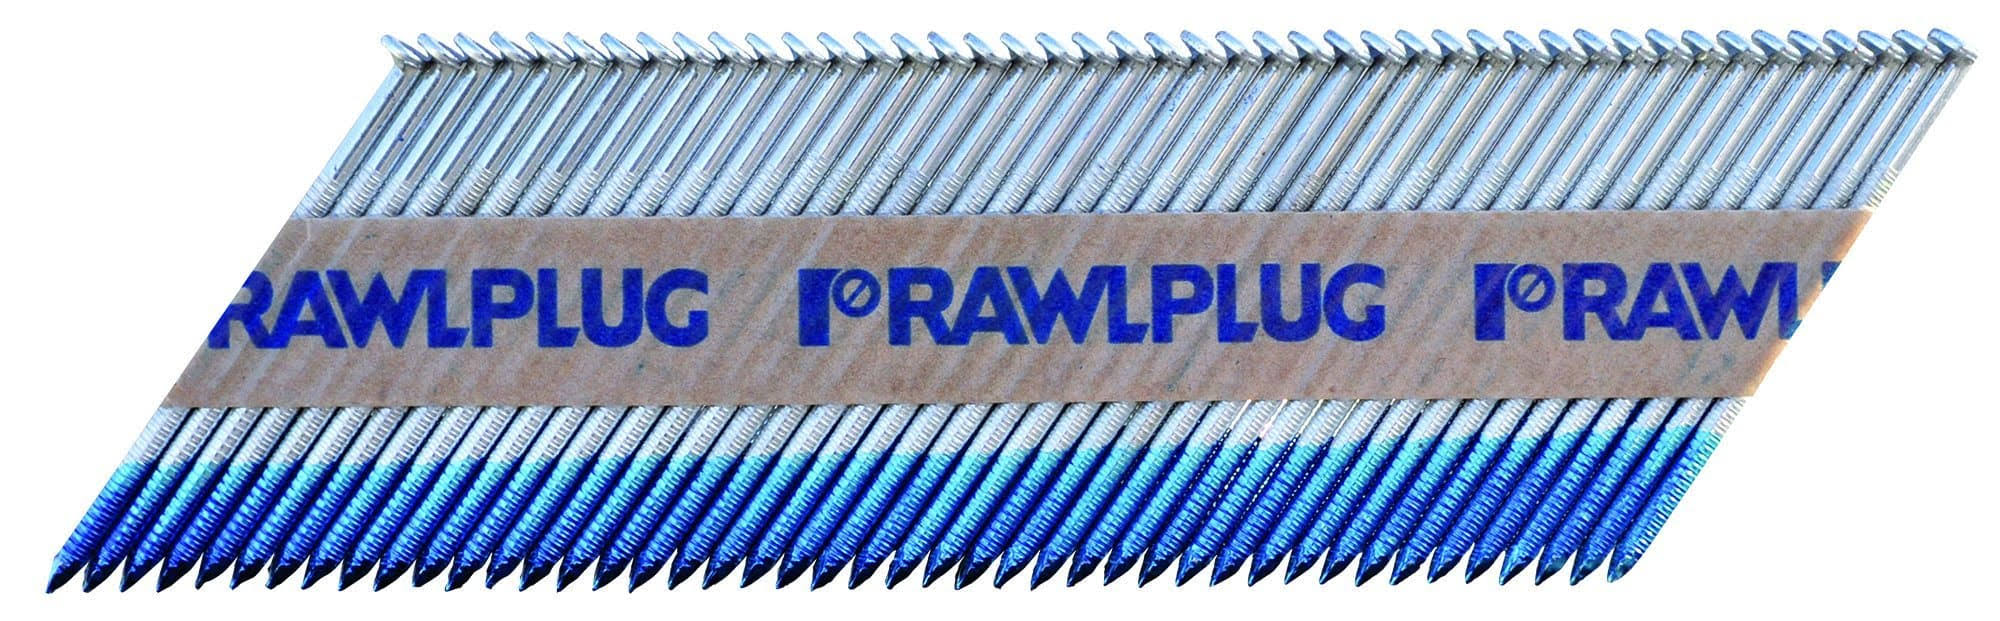 Rawlplug Galvanized Ring Nails - 2.8mm x 51mm, 3300pcs